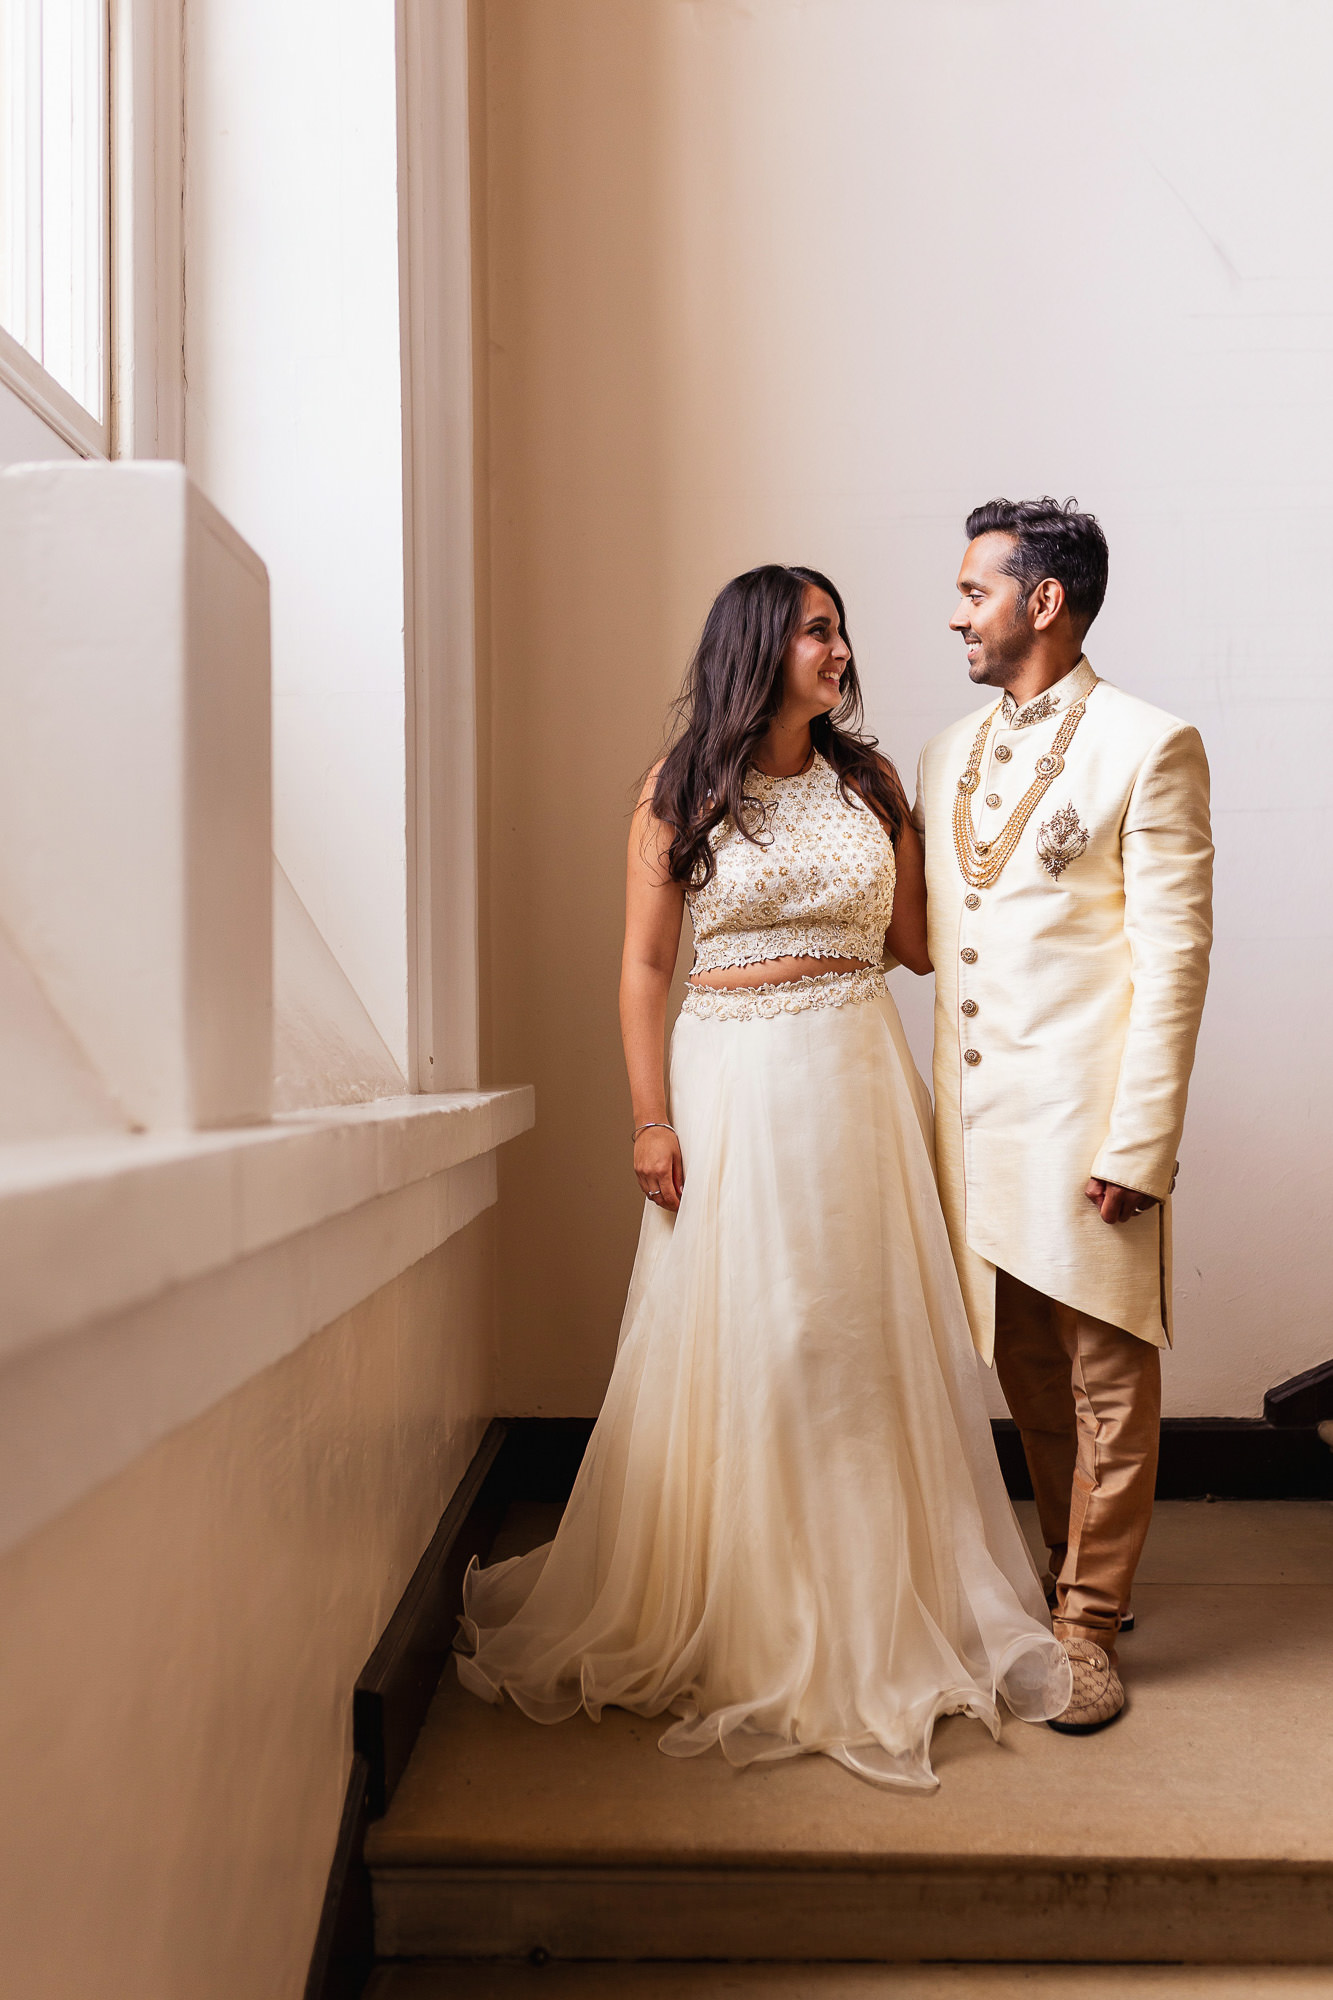 Stowe House, Civil Ceremony, Hindu Wedding, Multicultural Wedding Photographer, couples portrait